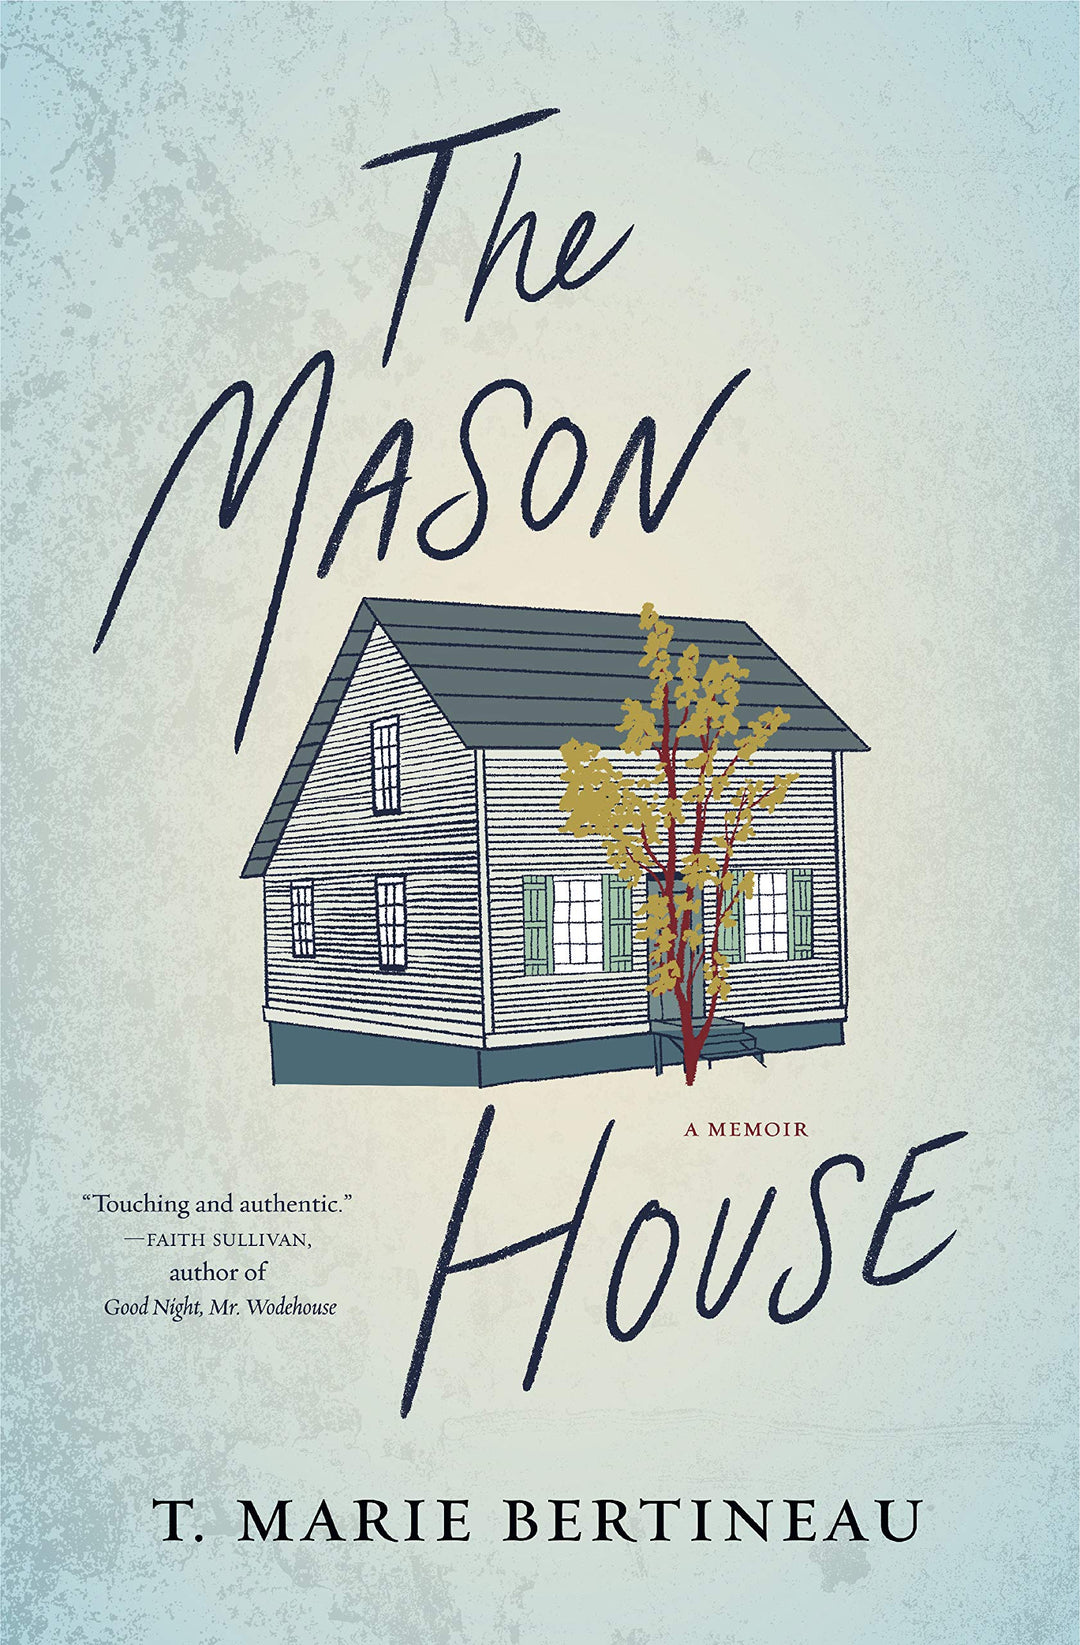 The Mason House by T. Marie Bertineau